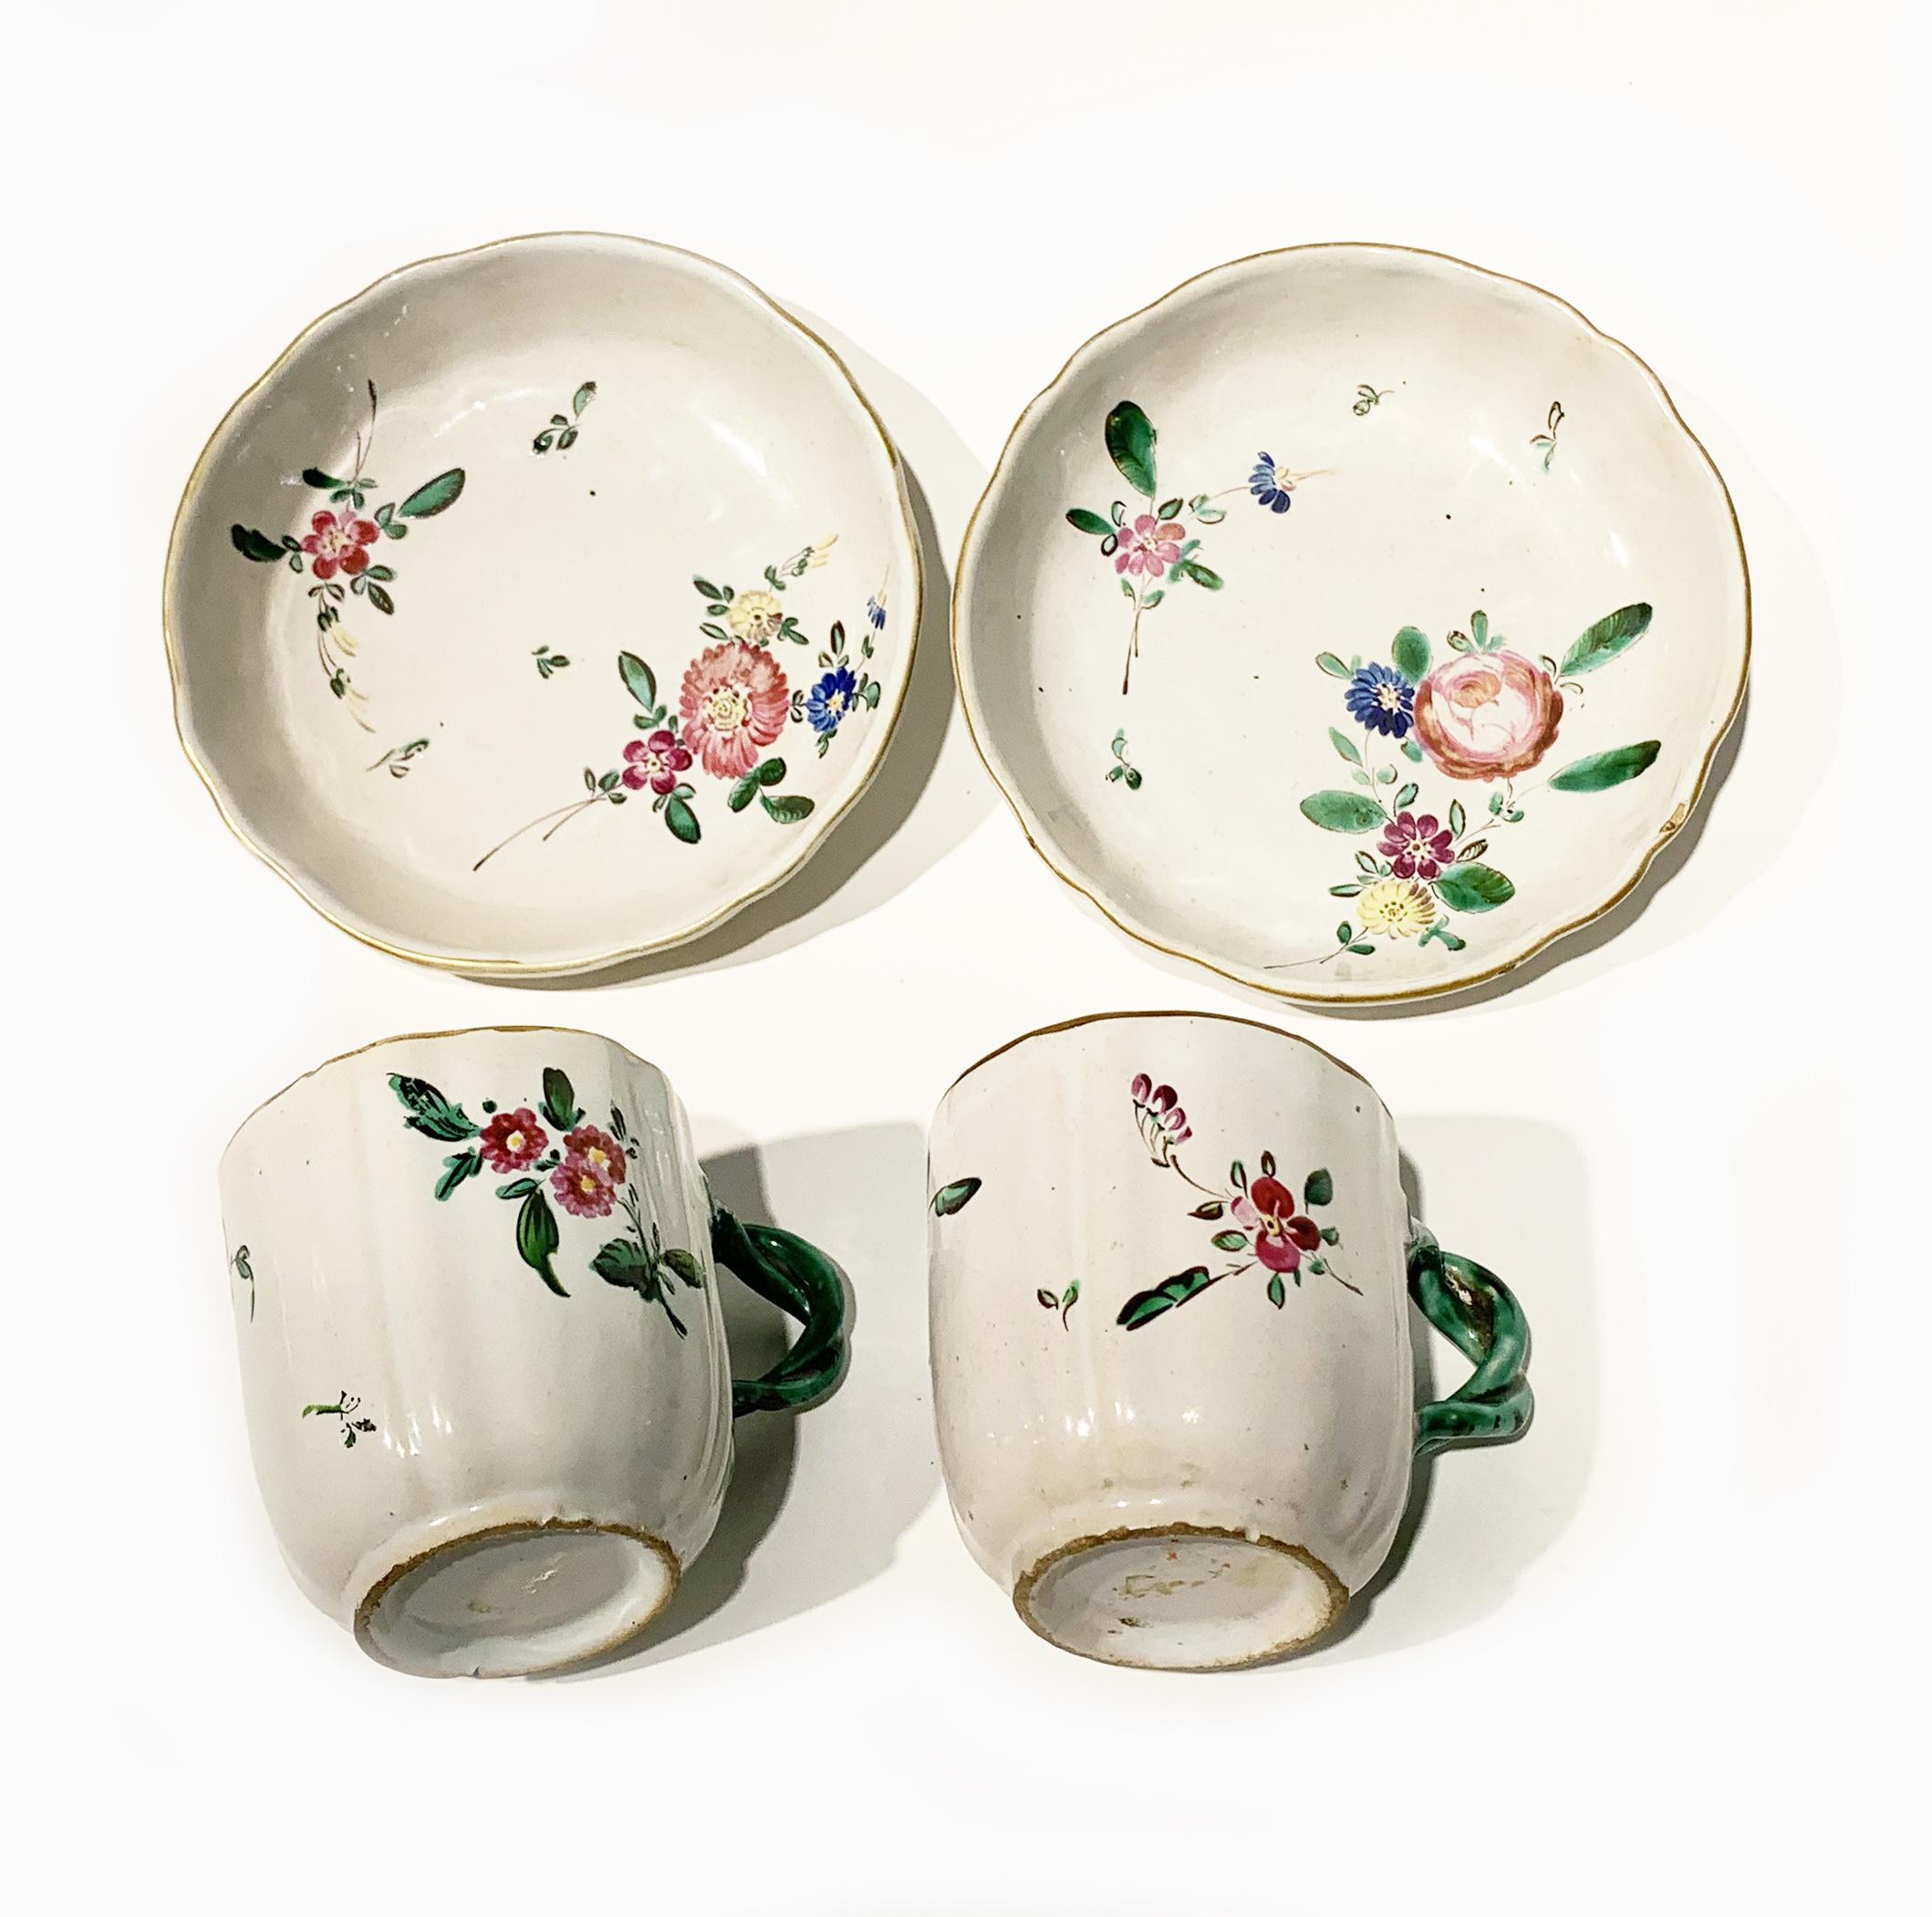 Ancient Italian Assortment Coffe Pot and Cups, Lodi, Circa 1765-1770 For Sale 2